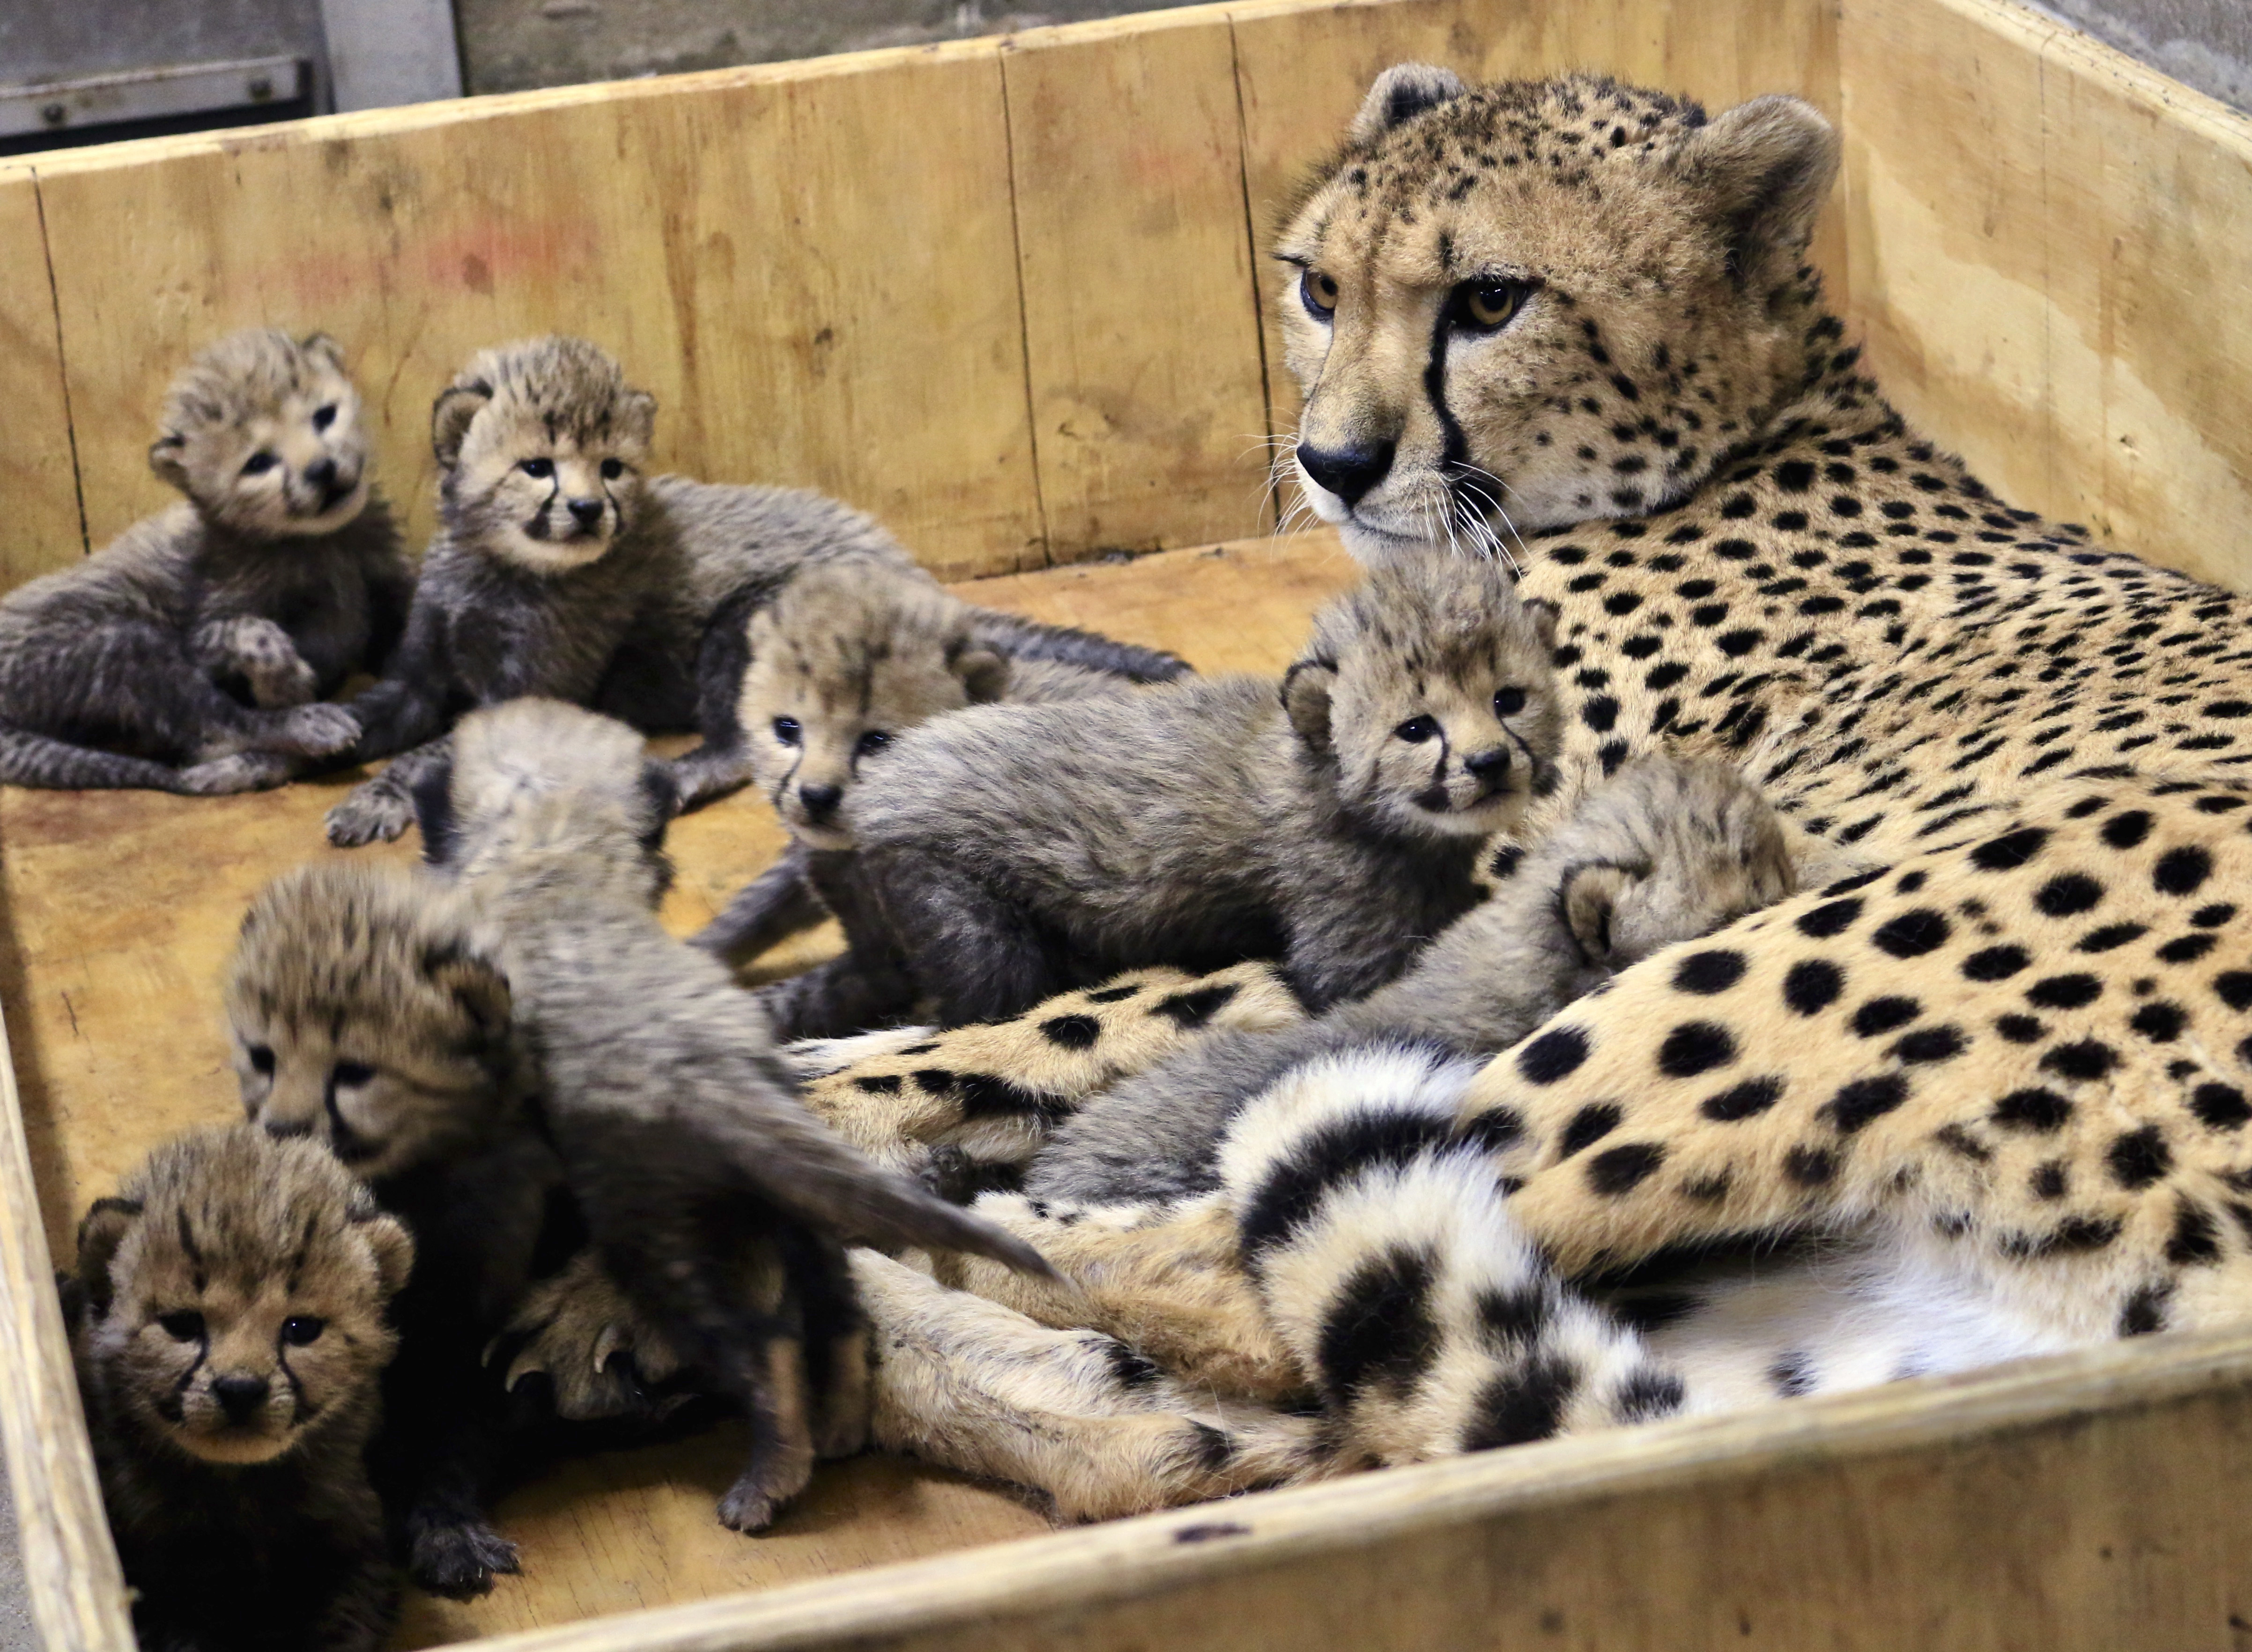 Bingwa and her eight new cheetah cubs. 